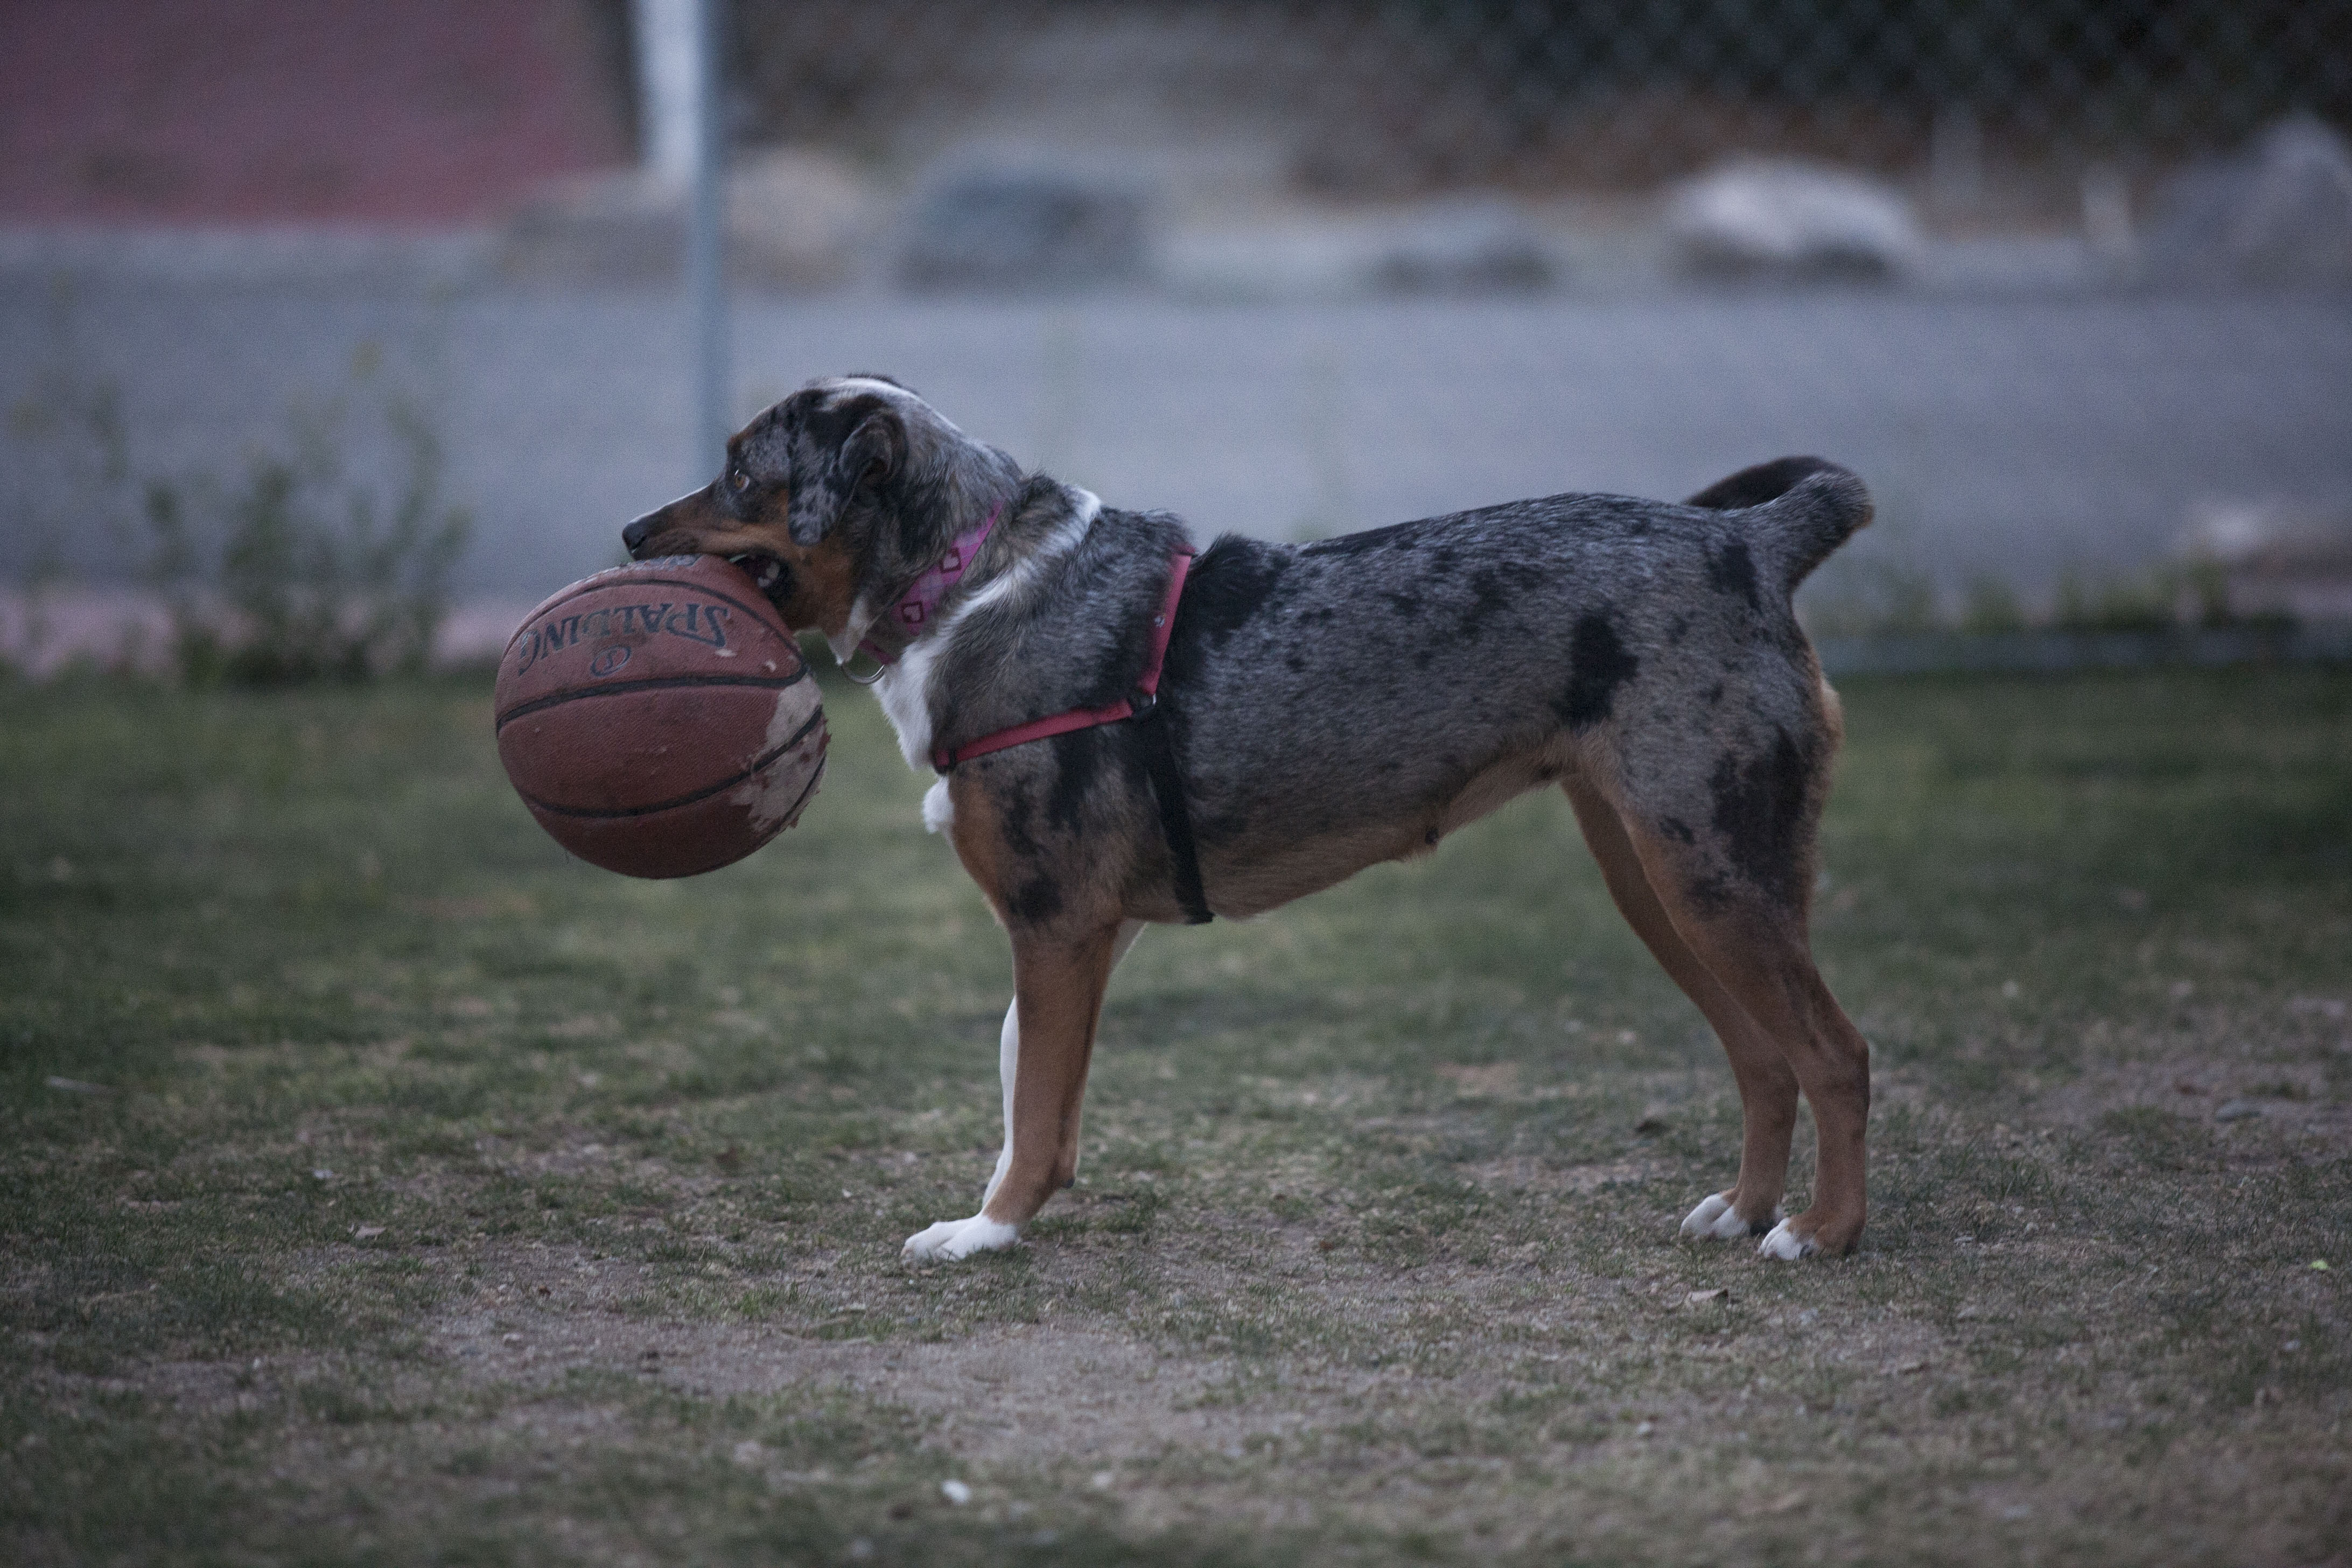 Lily loves basketballs